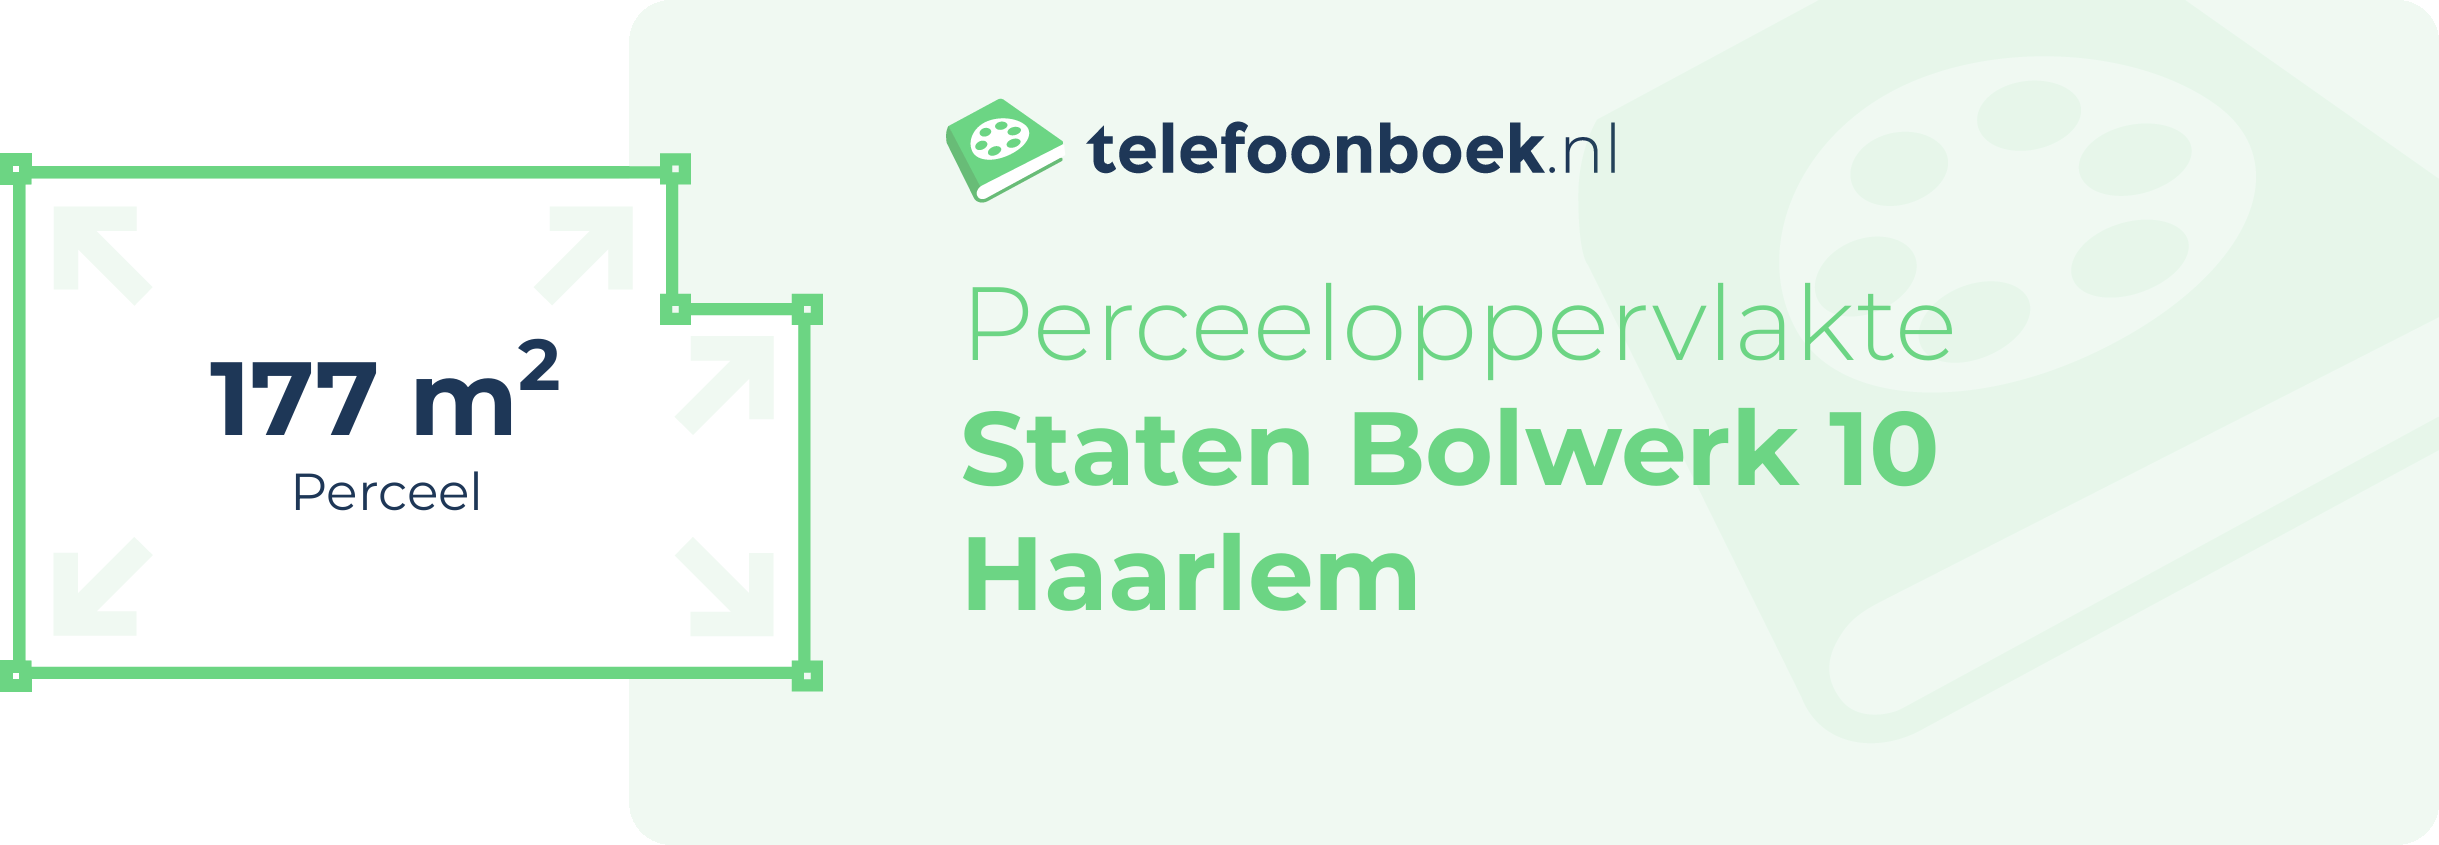 Perceeloppervlakte Staten Bolwerk 10 Haarlem